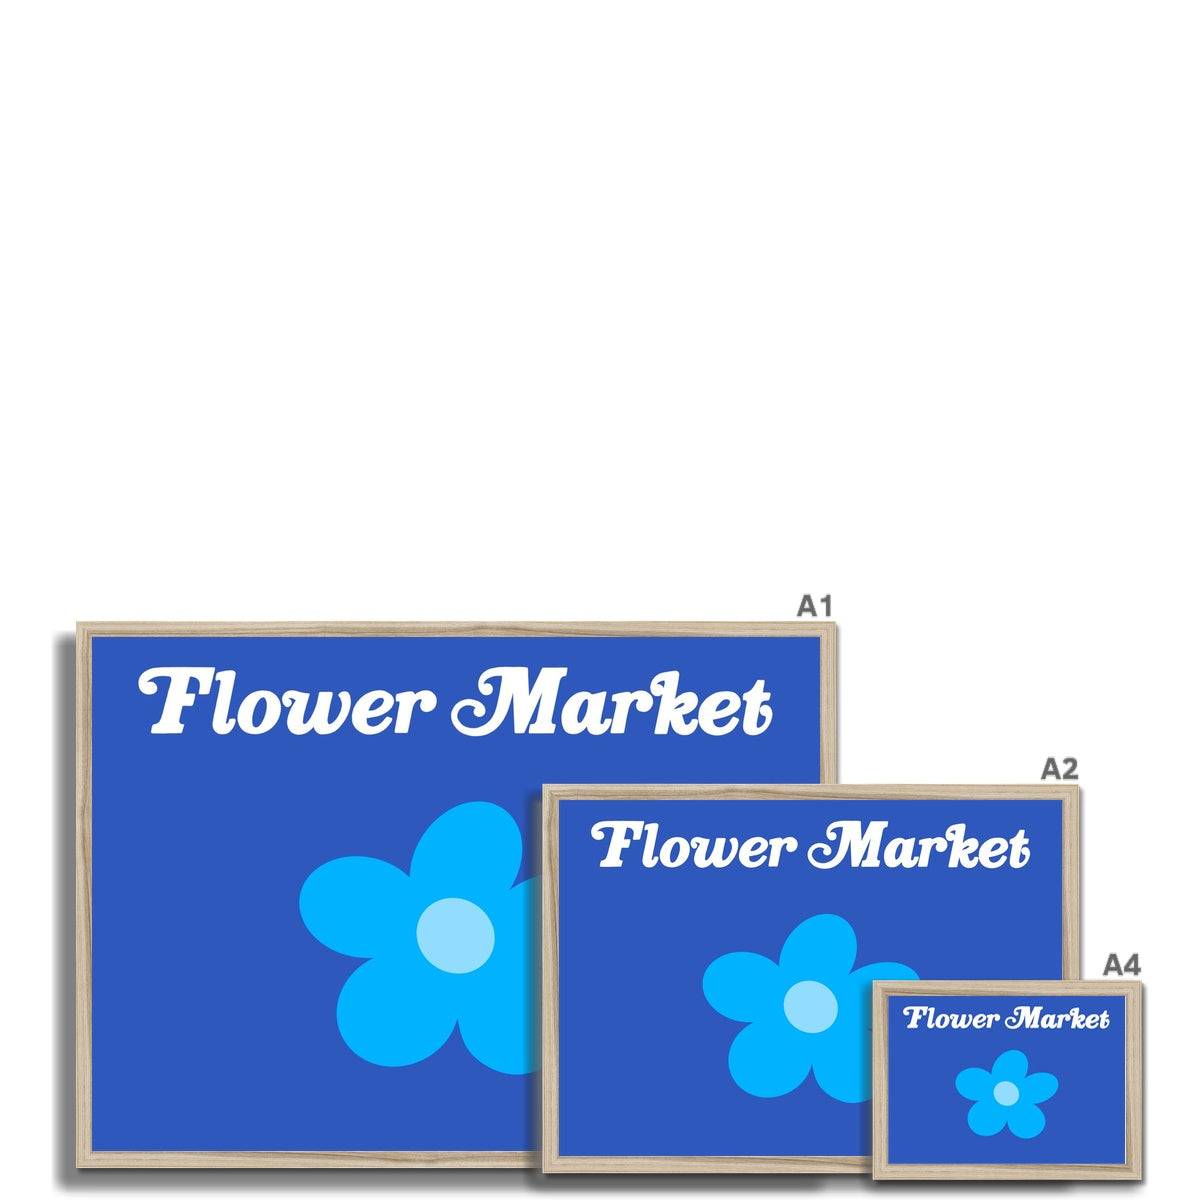 flower market sign Framed Print